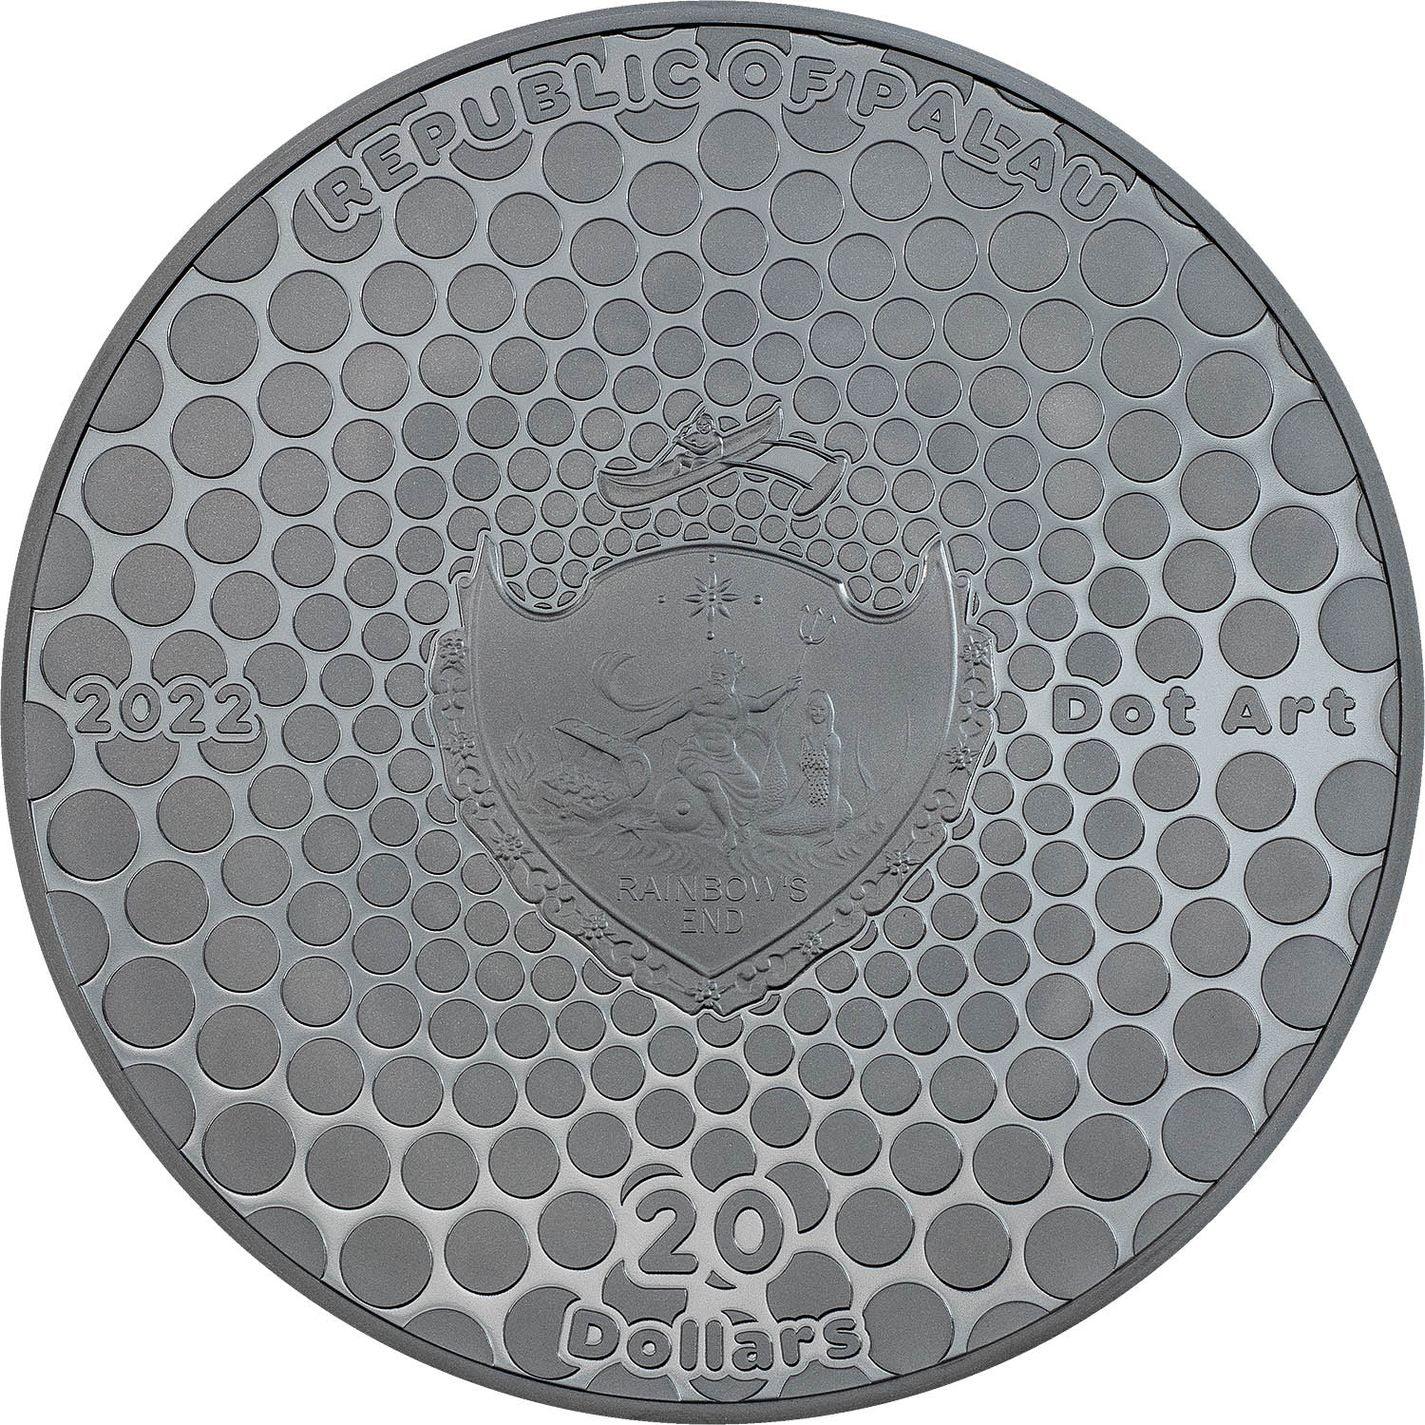 EGYPT PYRAMID Dot Art 3 Oz Silver Coin 20$ Palau 2022 - PARTHAVA COIN